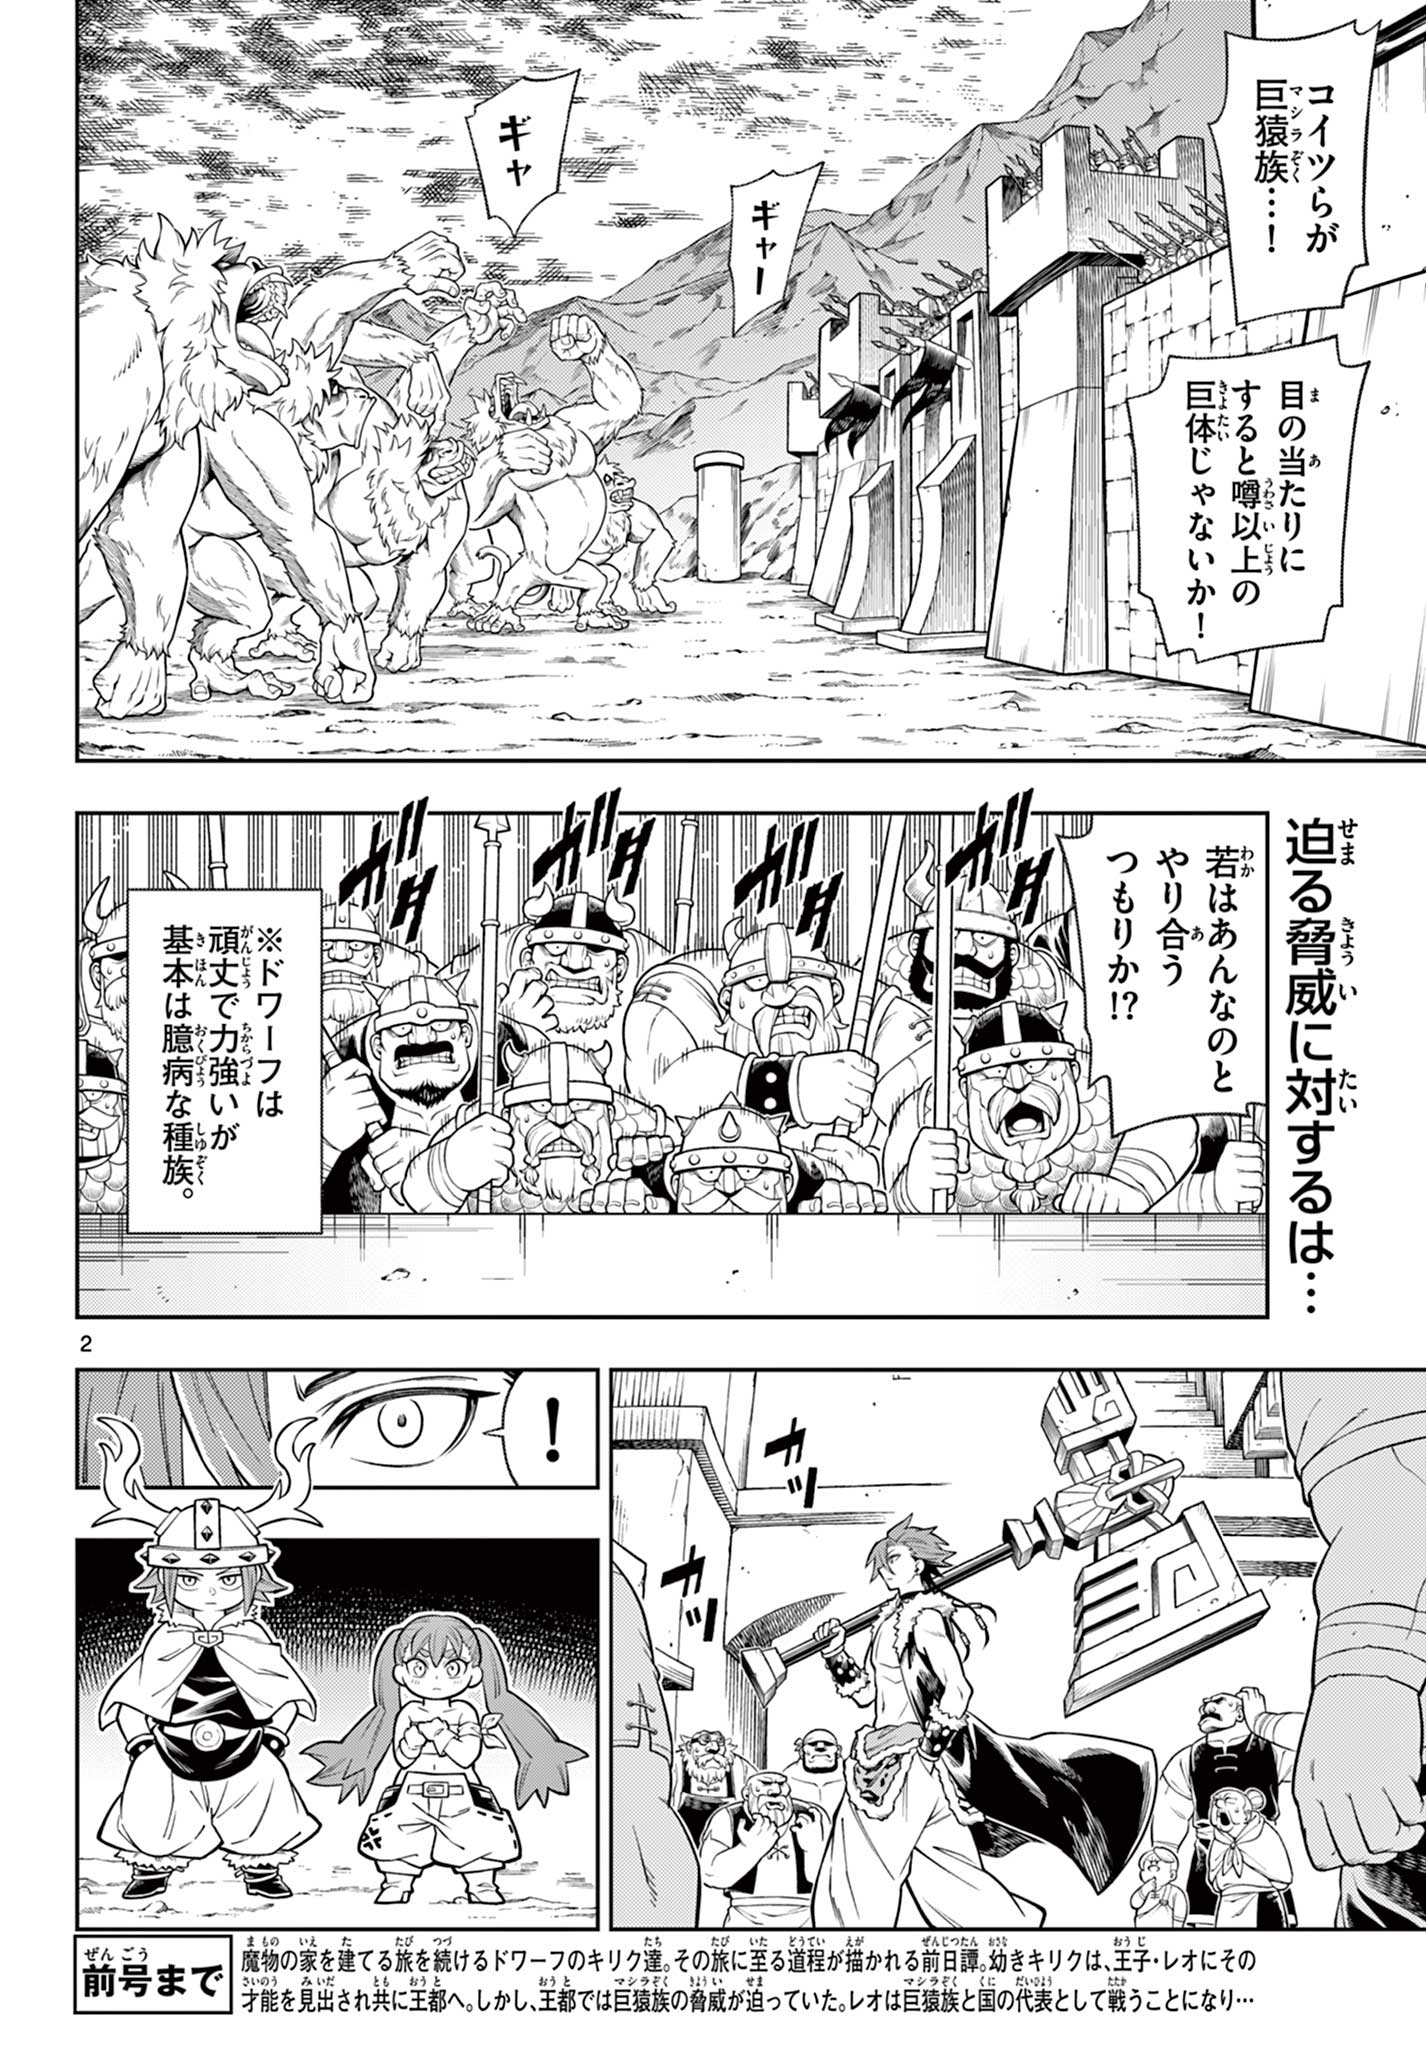 Soara to Mamono no ie - Chapter 24 - Page 2